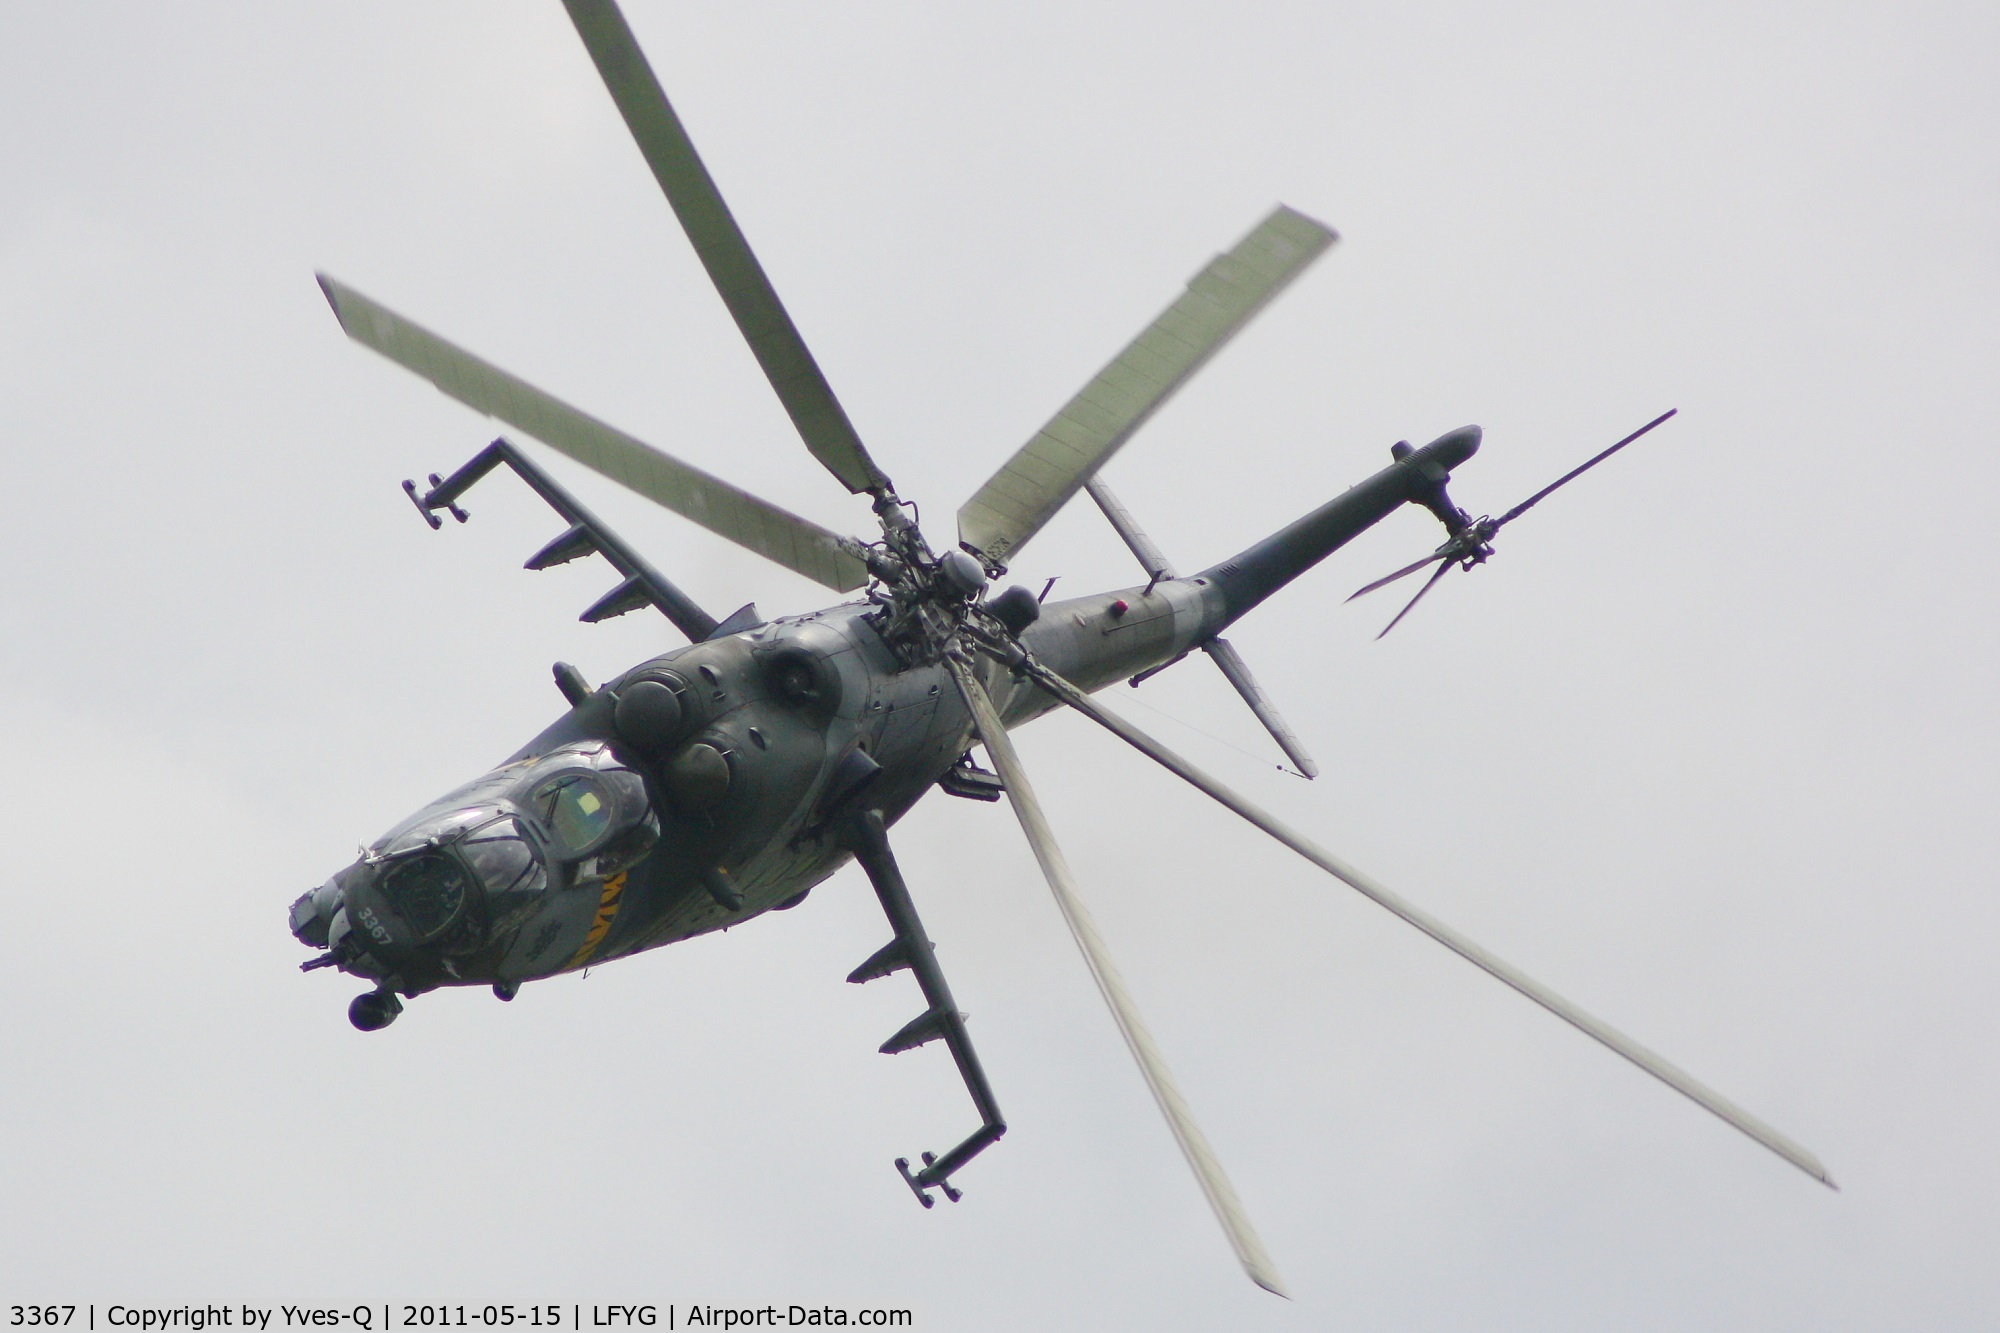 3367, 2005 Mil Mi-35 Hind E C/N 203367, Czech Republic Air Force Mil Mi-35 Hind E, Cambrai-Niergnies Airfield (LFYG) open day Tiger Meet 2011